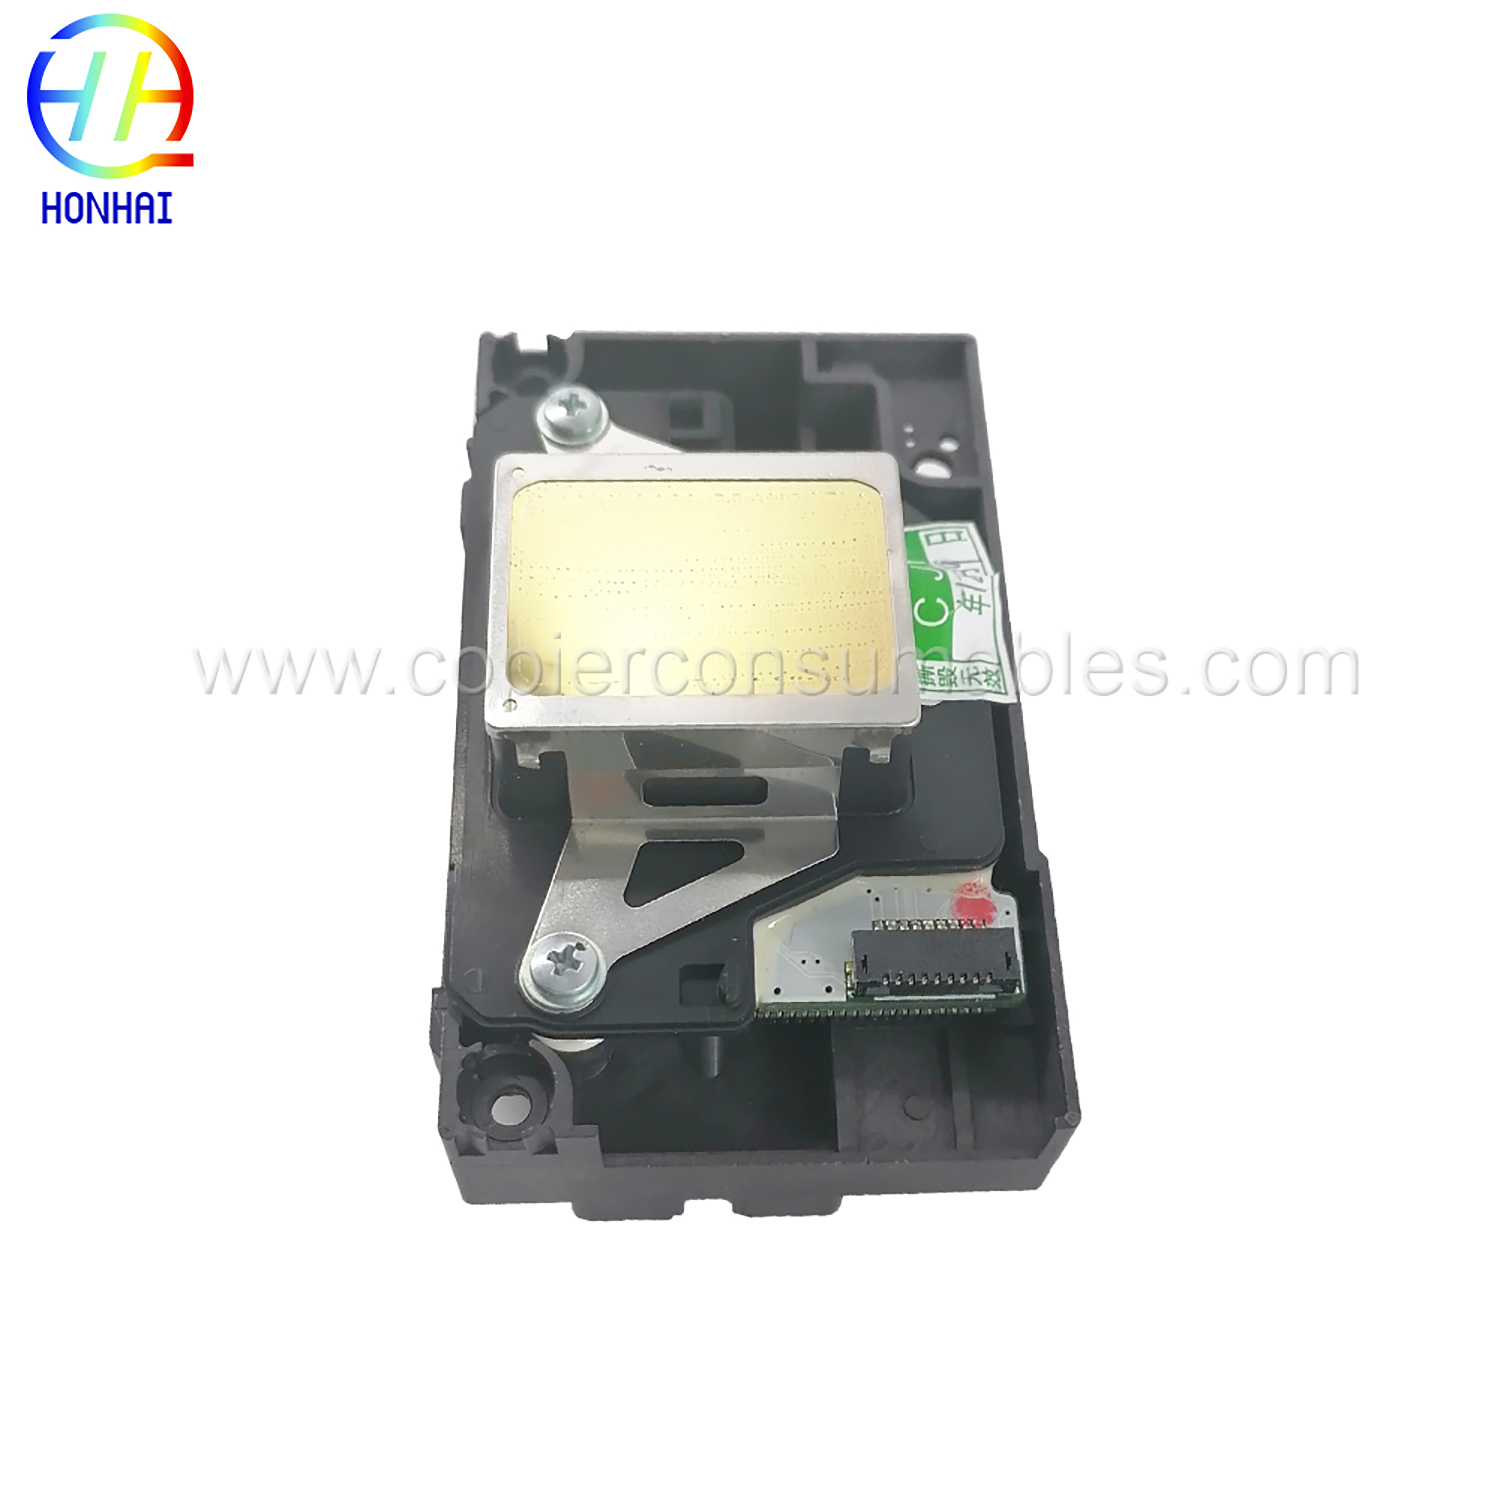 Cabezal de impresión compatible con Epson L1800 1410 1430 1500W (3) 拷贝